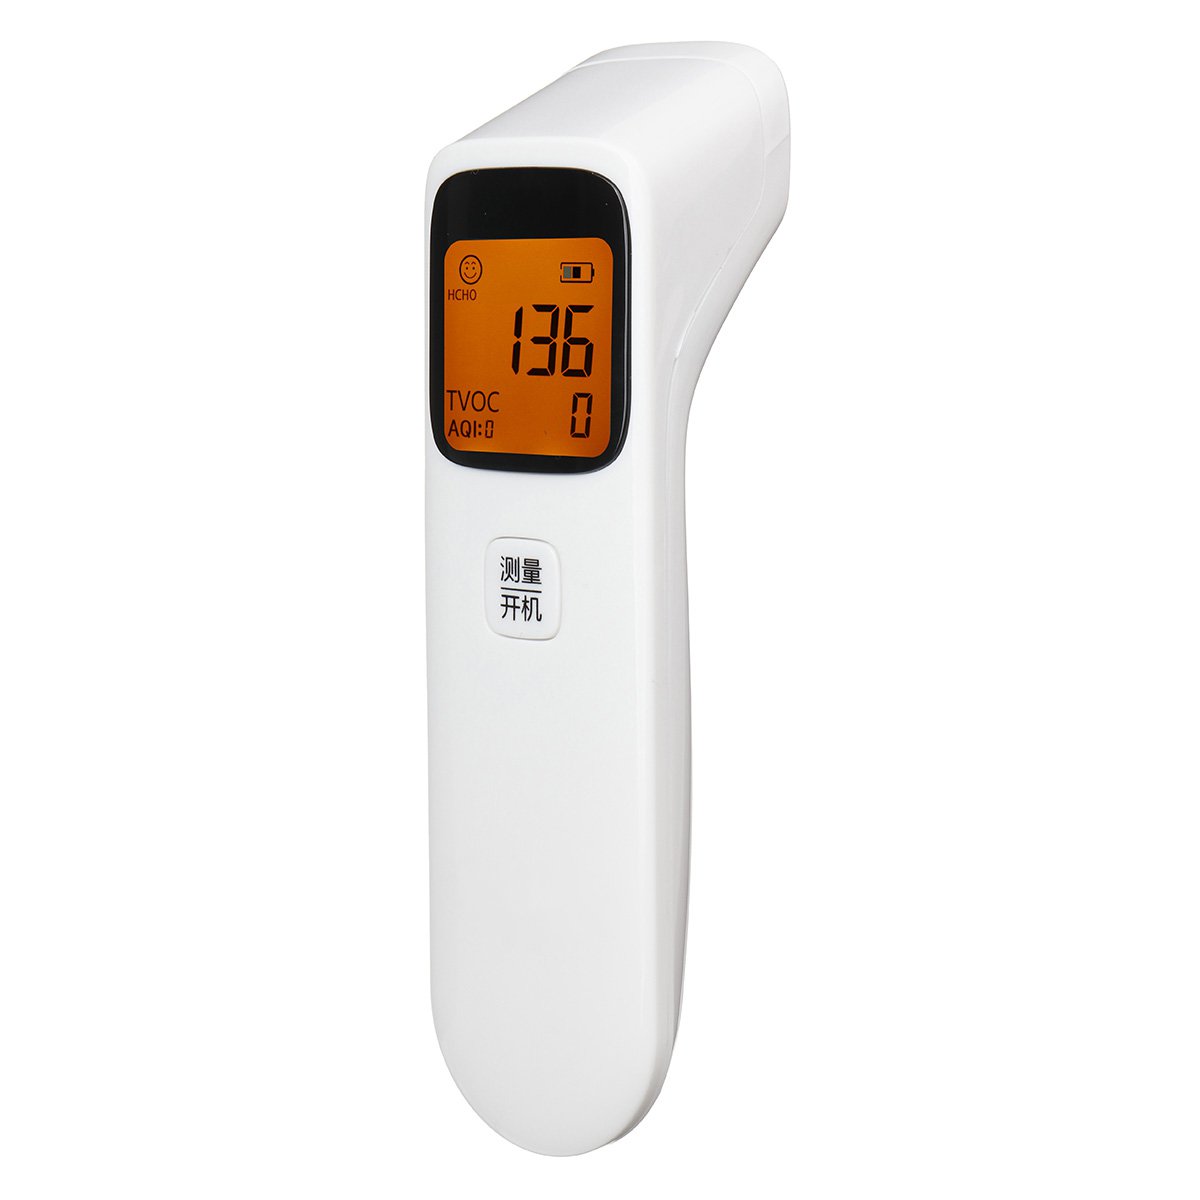 Smart-Air-Formaldehyde-Gas-Detector-Monitors-Tester-For-HCHOTVOCAQI-Detection-1468235